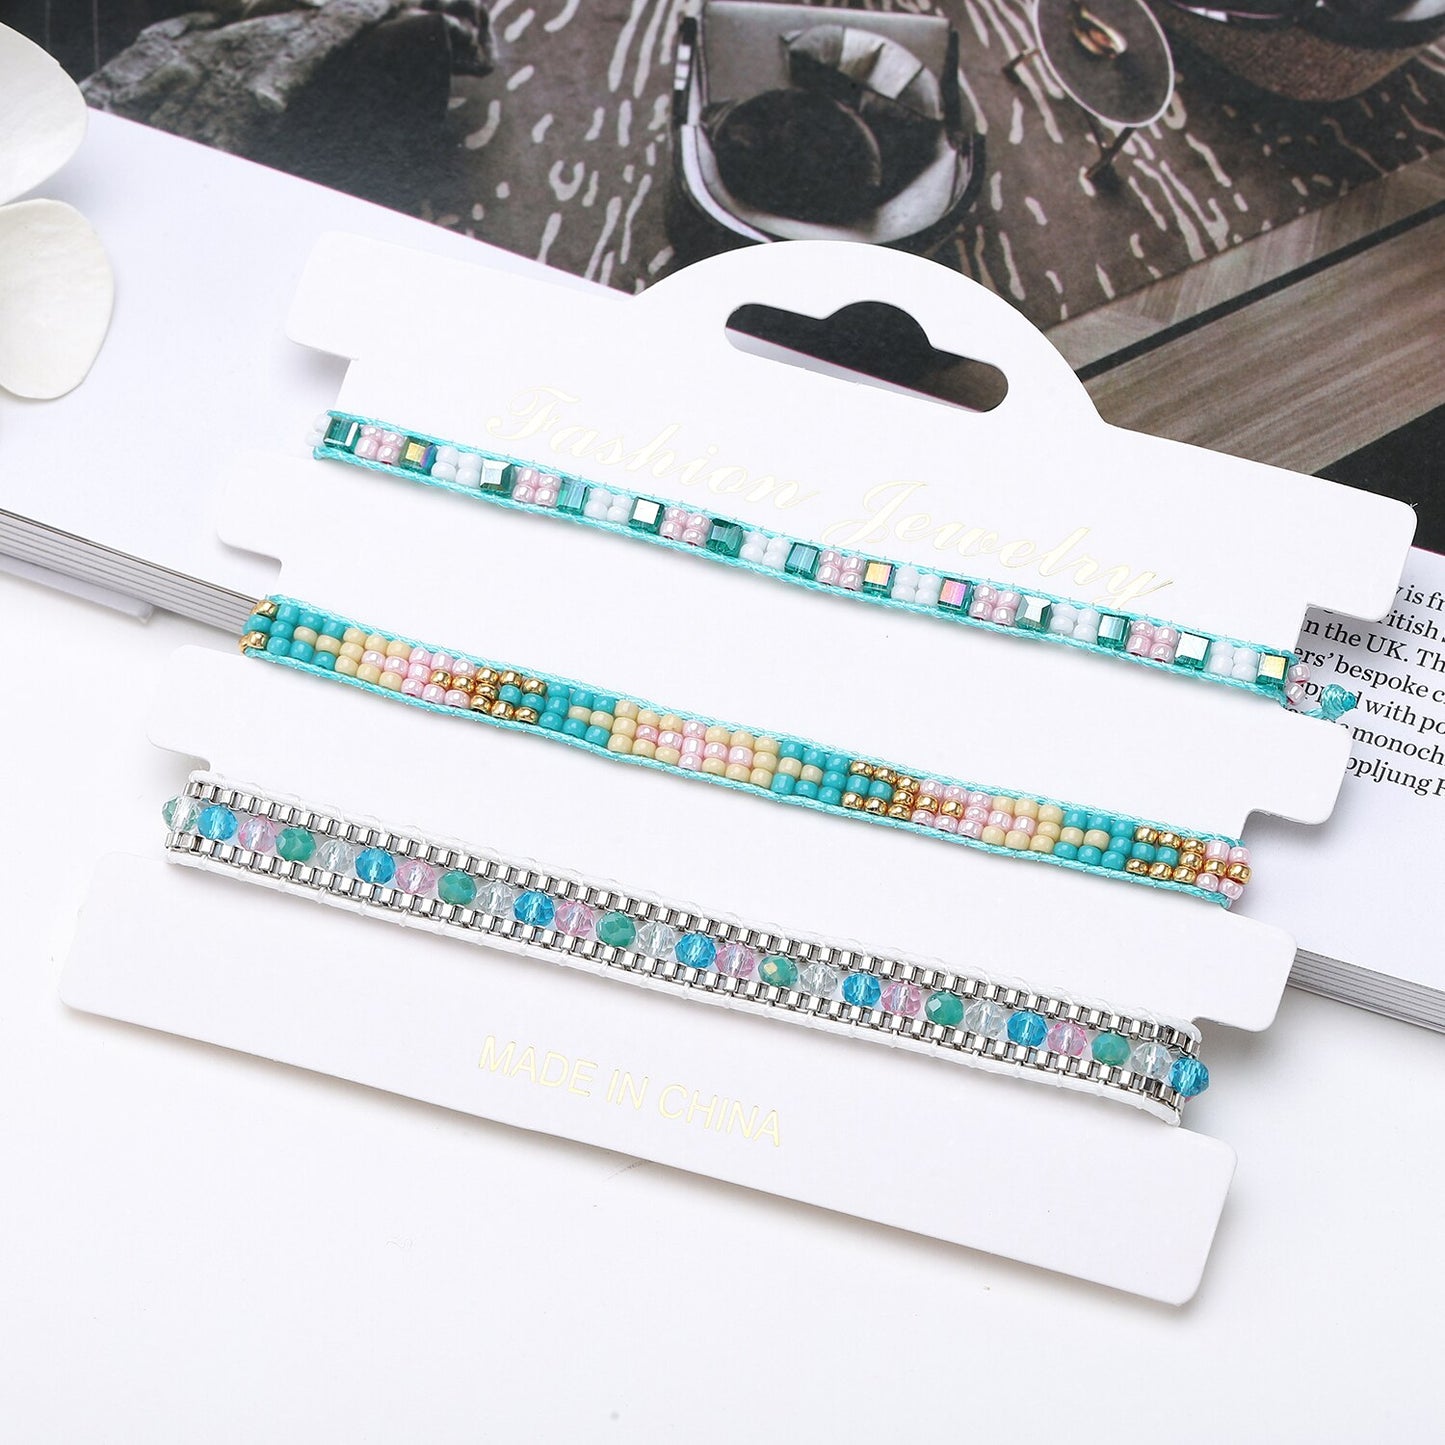 3pcs Woven Friendship Bracelets Handmade Braided Chain Ankles for Women Men Beach Crystal Beads Wrap Bracelet Adjustable Jewelry